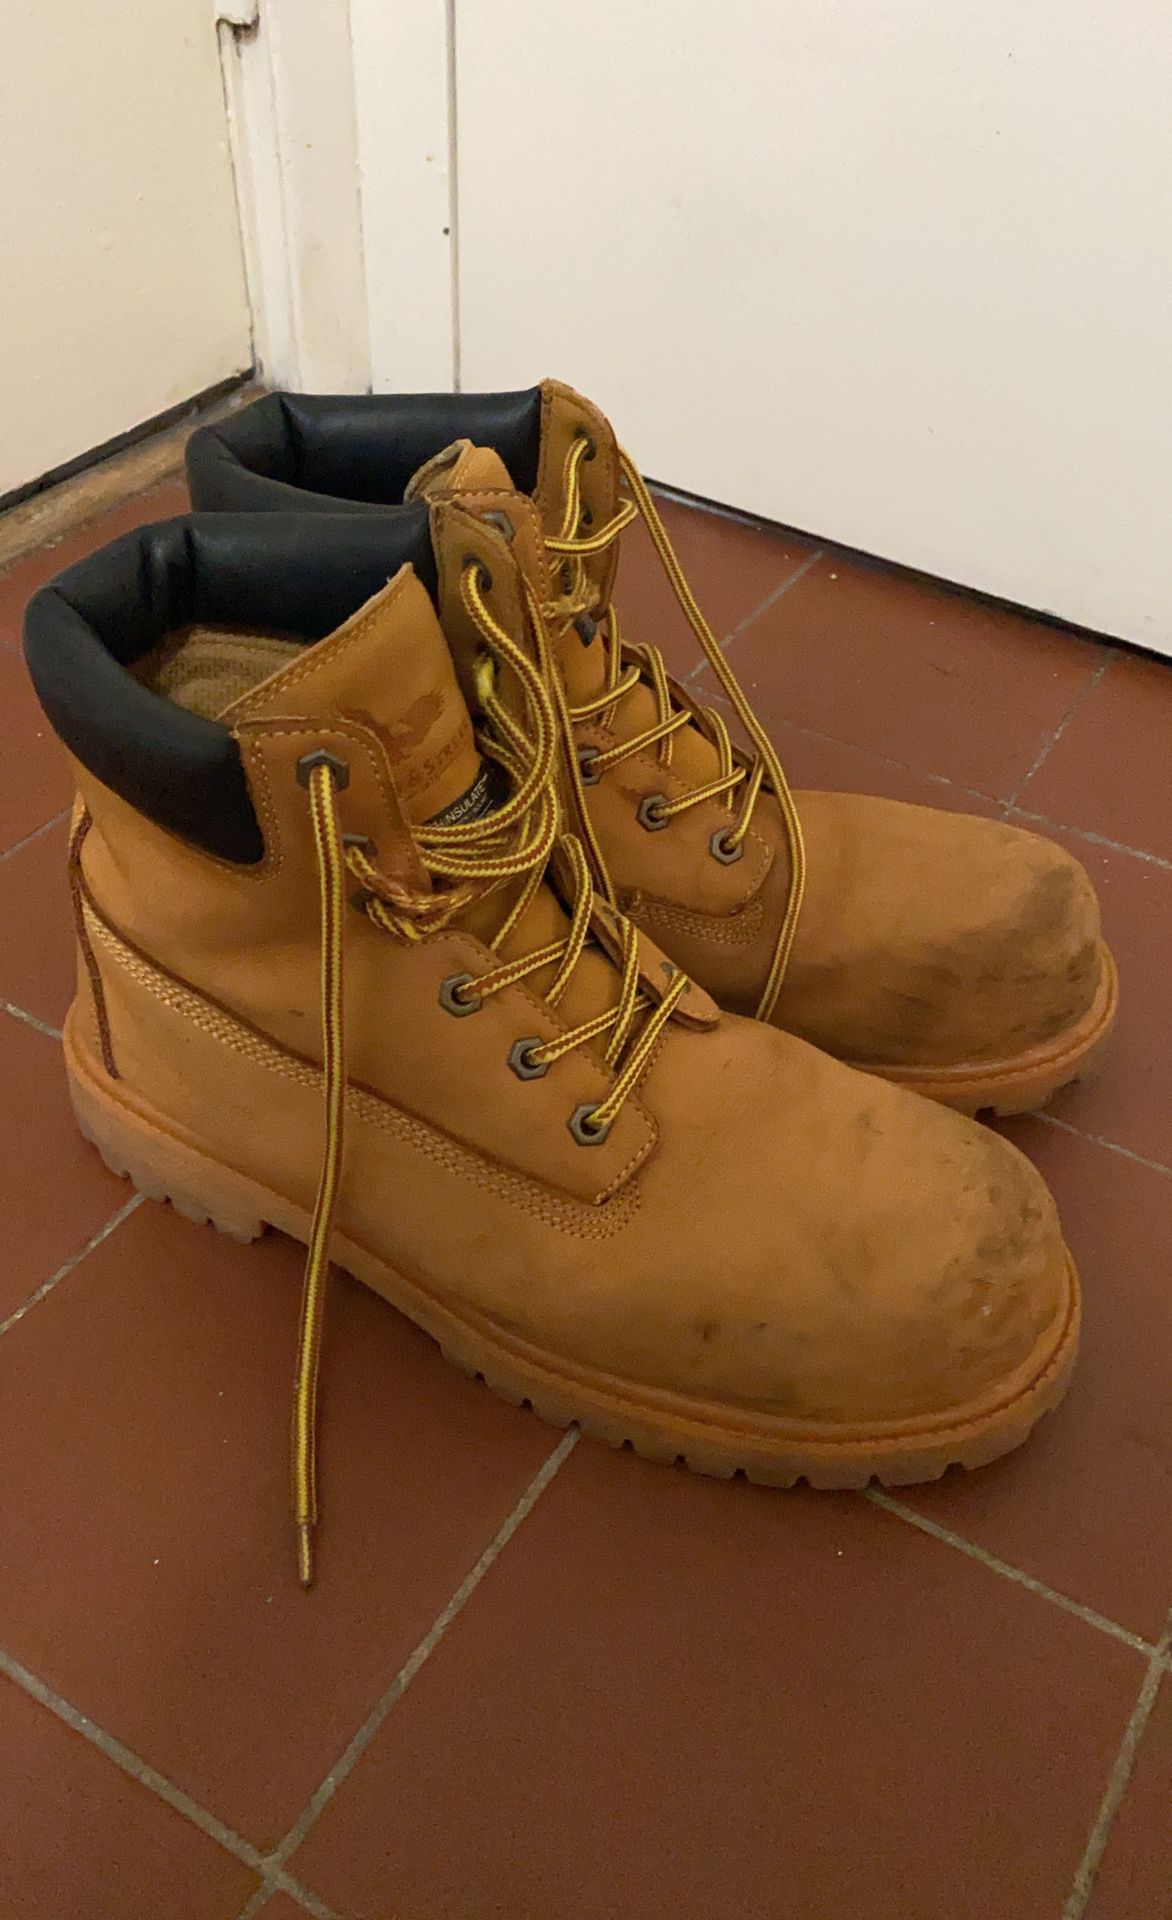 Field & Stream construction boots